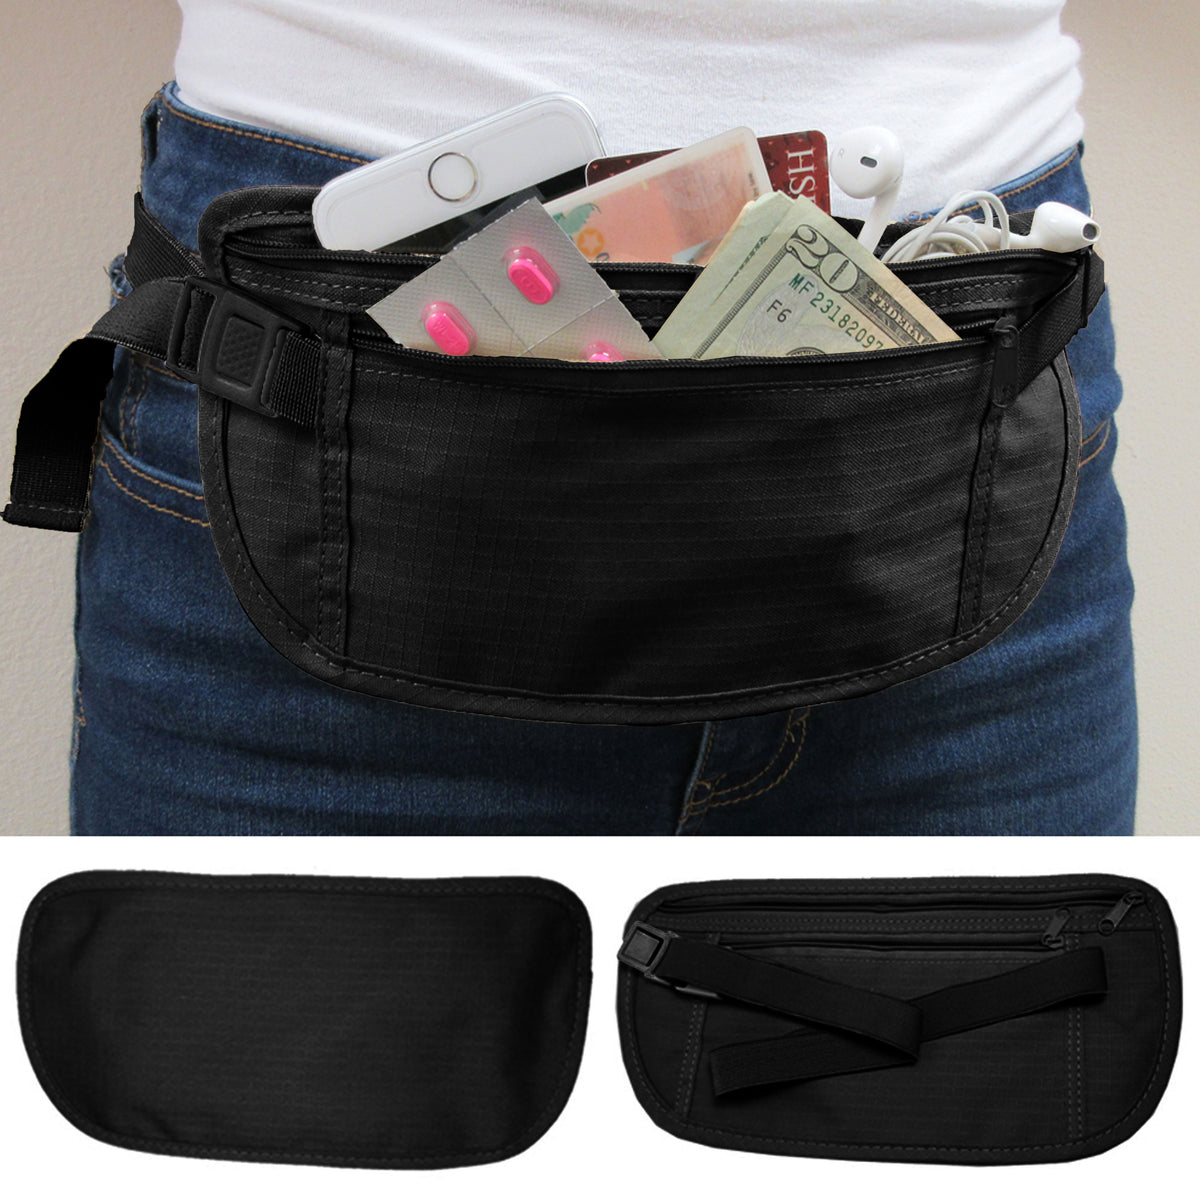 1 Travel Money Waist Pouch Belt Wallet Hidden Under Clothes Secure